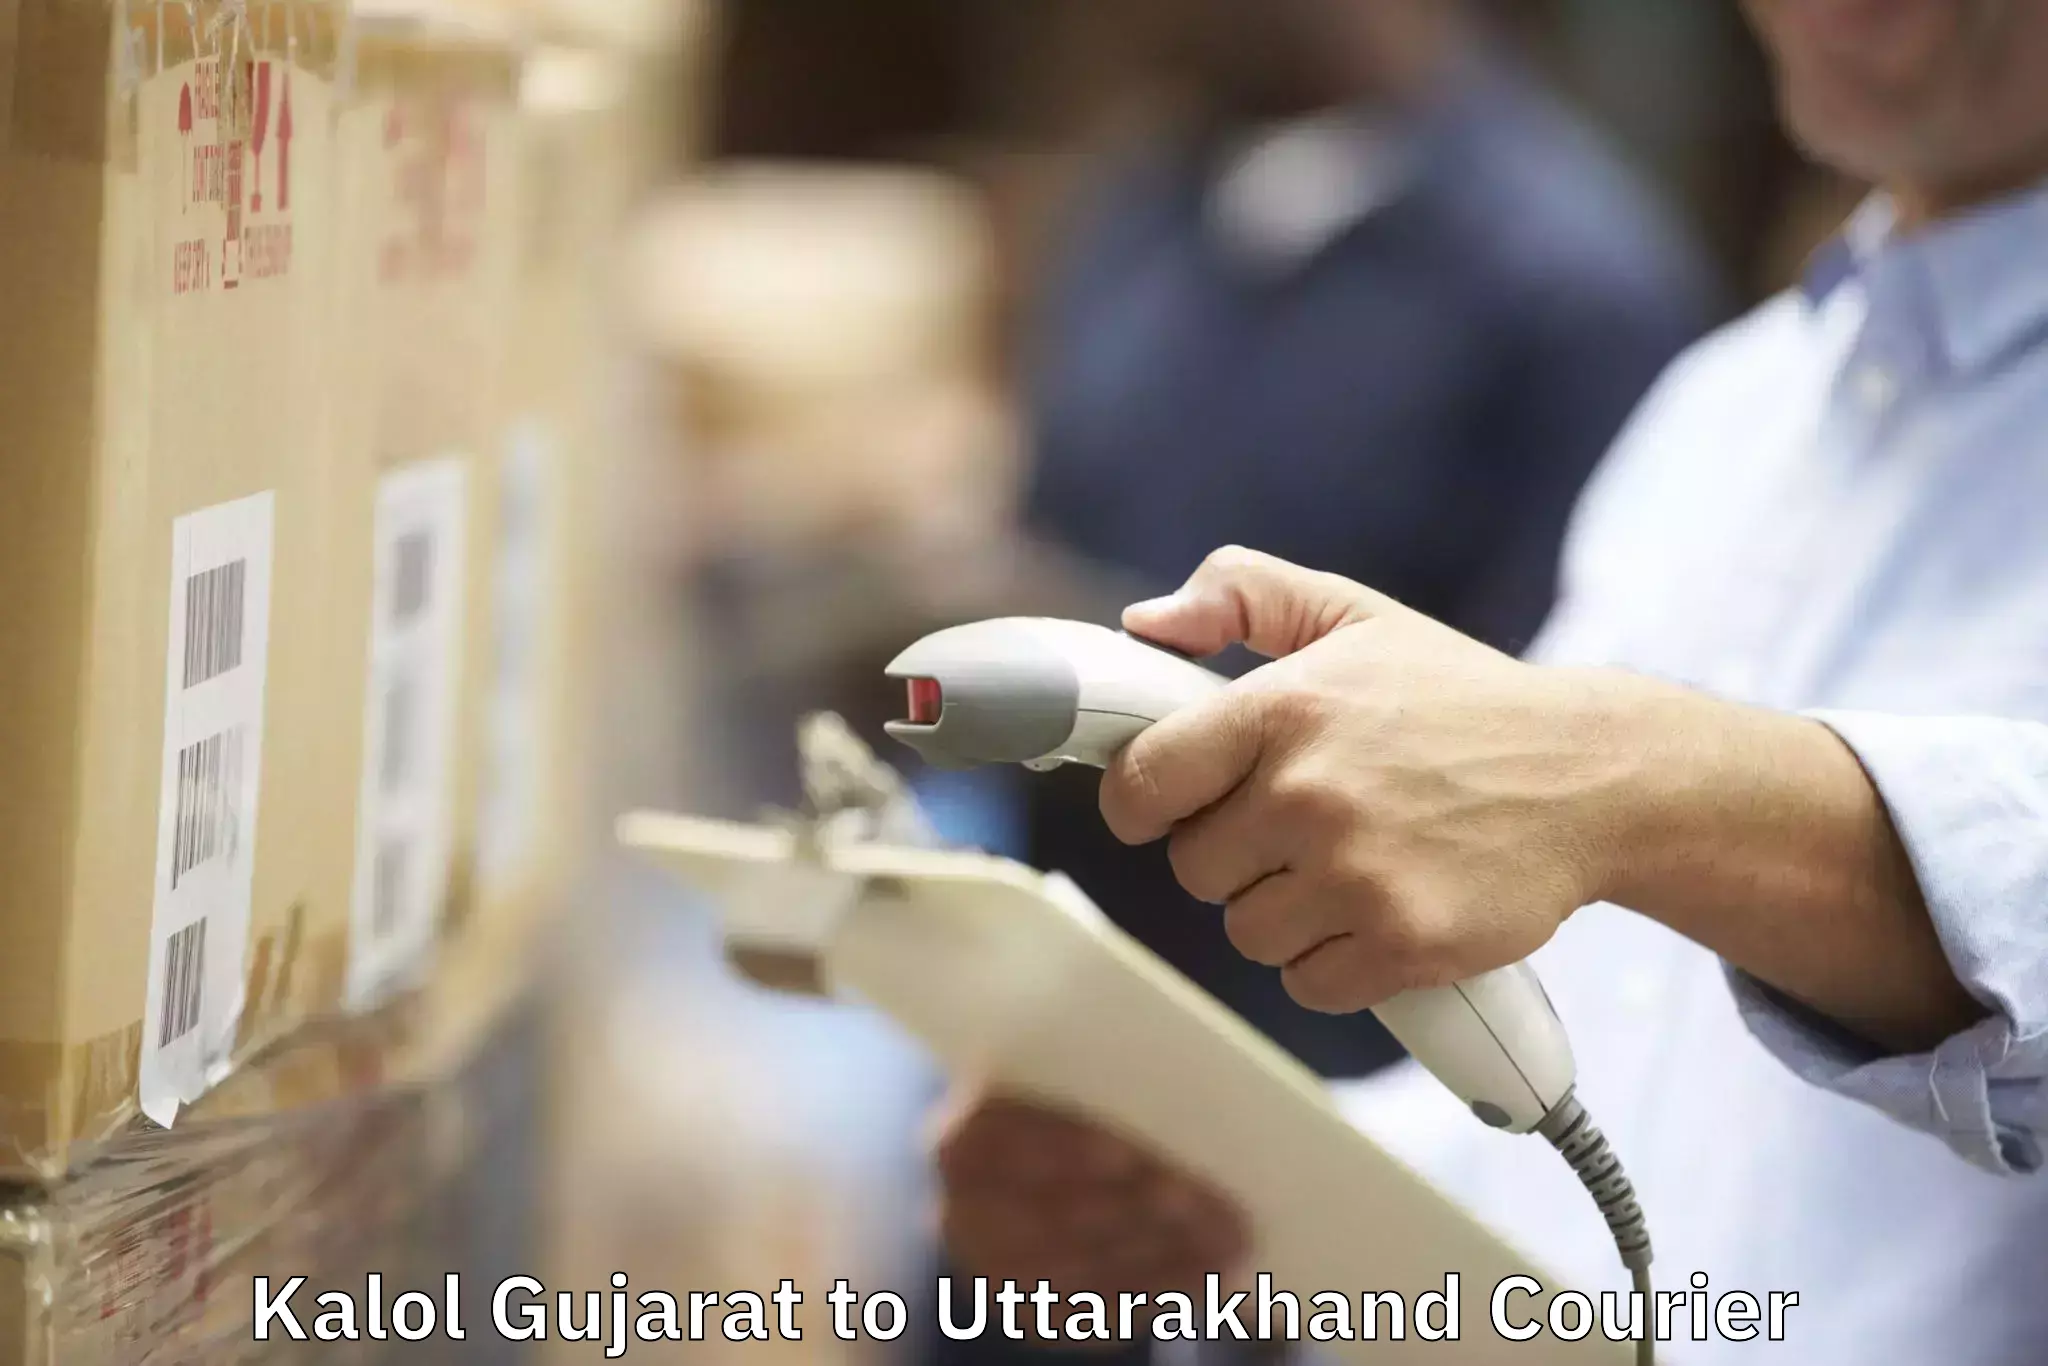 Efficient moving company in Kalol Gujarat to Uttarakhand